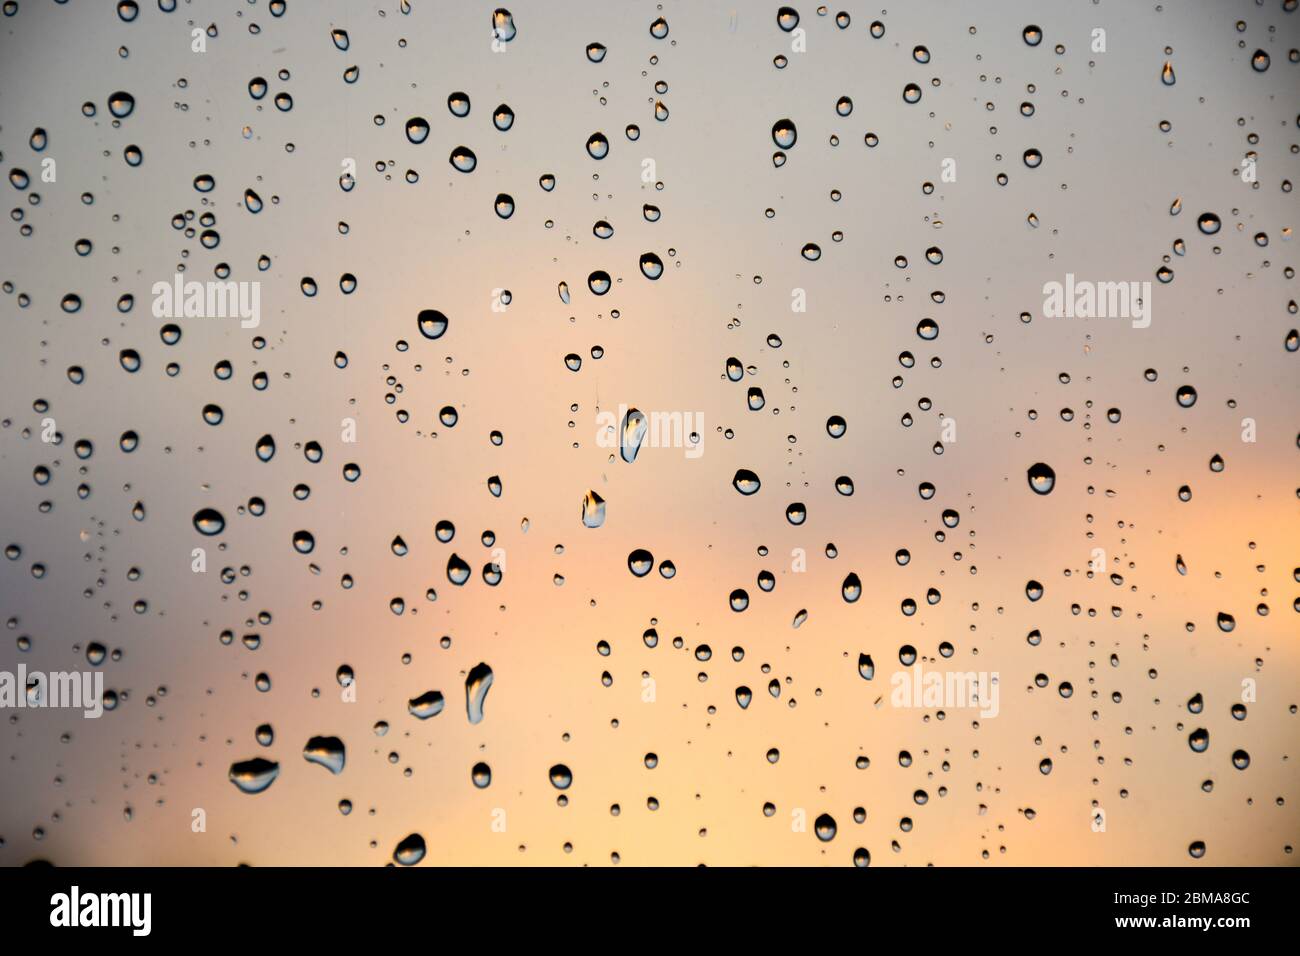 Drops of rain on a window glass. Beautiful vibrant twilight sky in background. Stock Photo